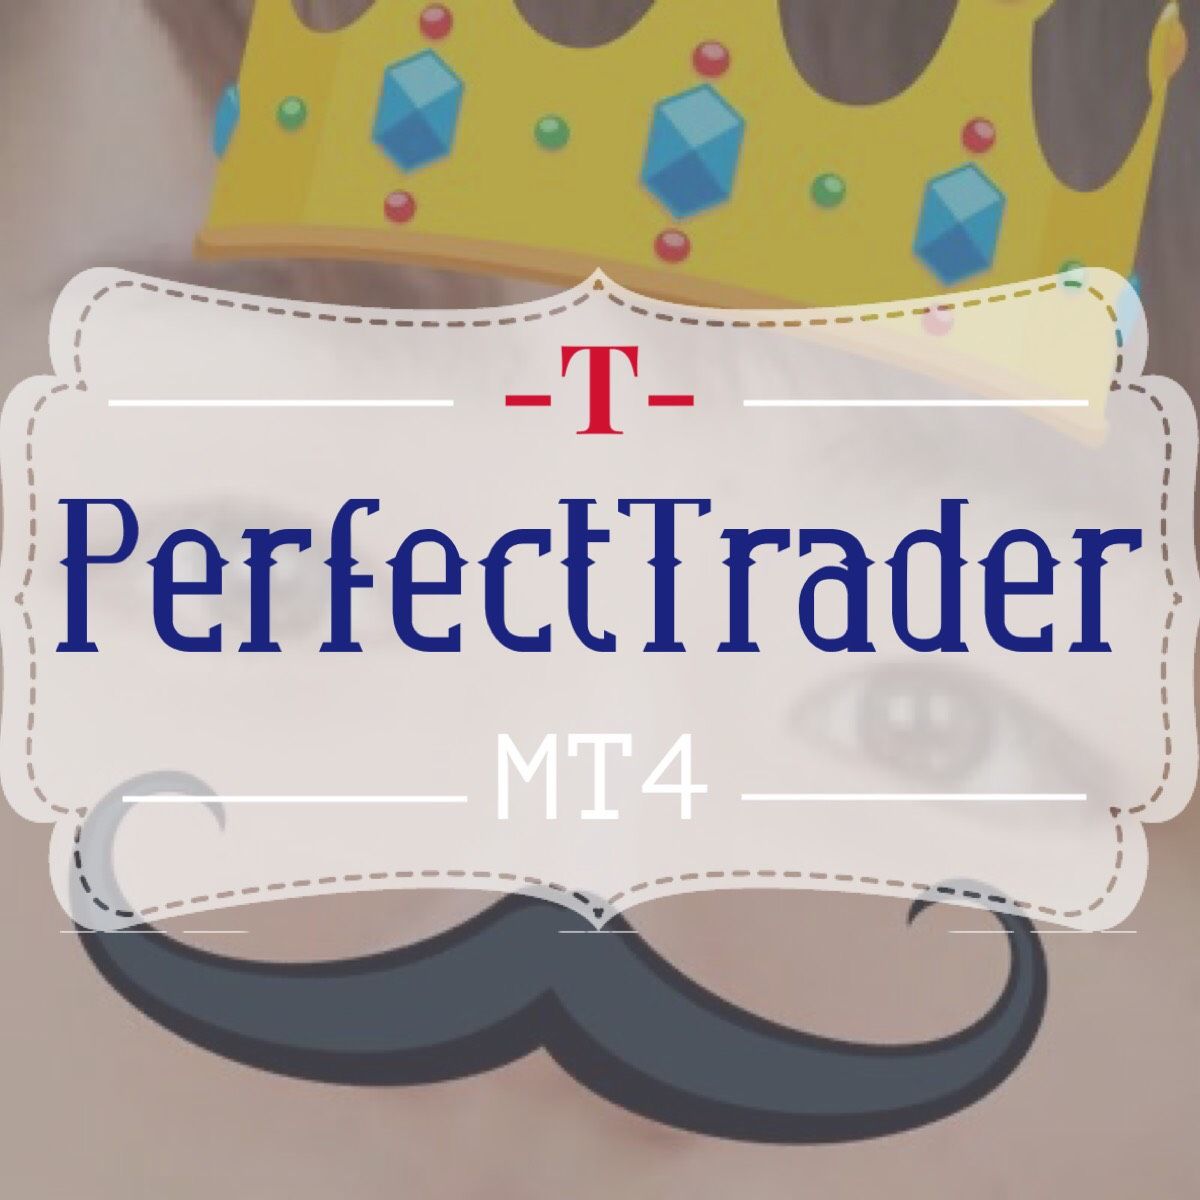 -T- Perfect Trader Indicators/E-books